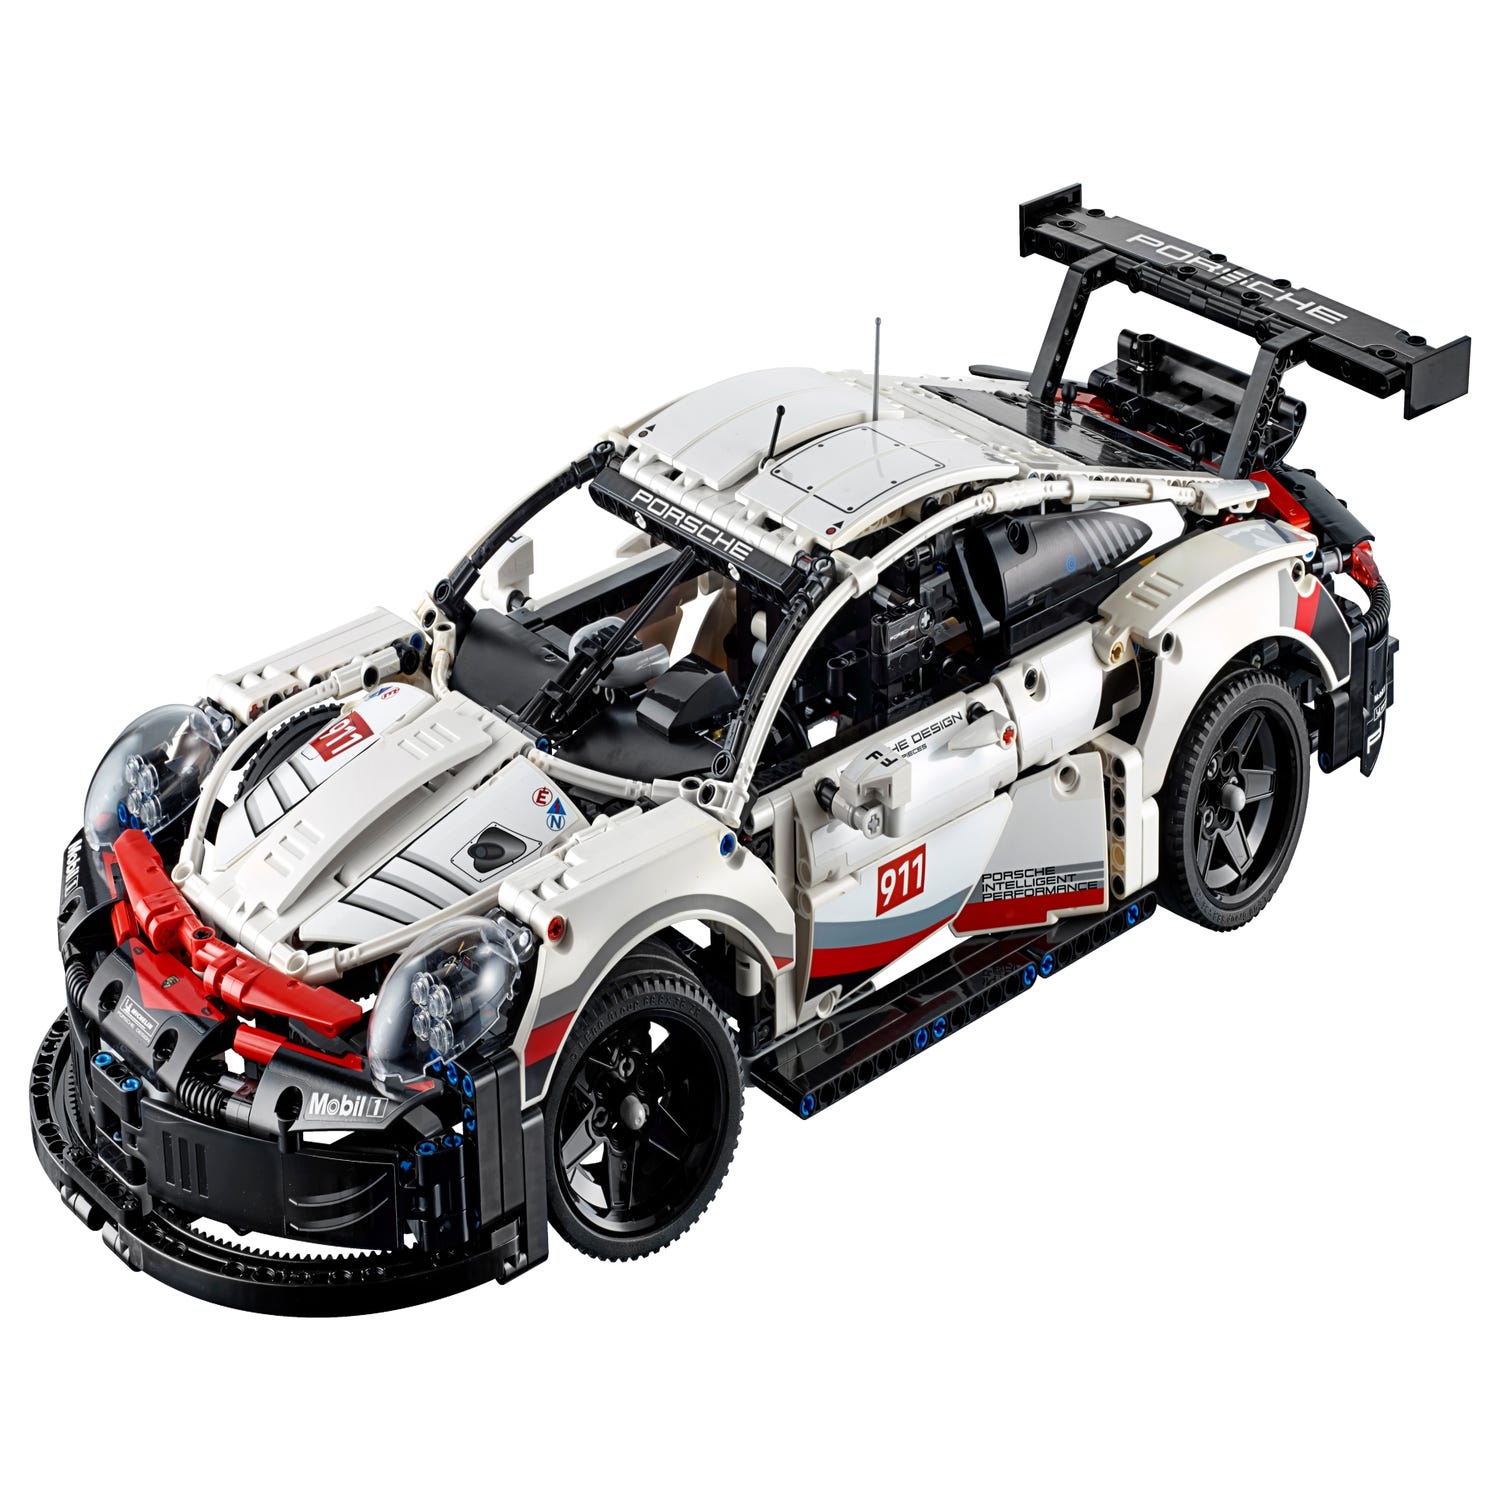 Rent LEGO set: Porsche 911 RSR at Lend-a-Brick